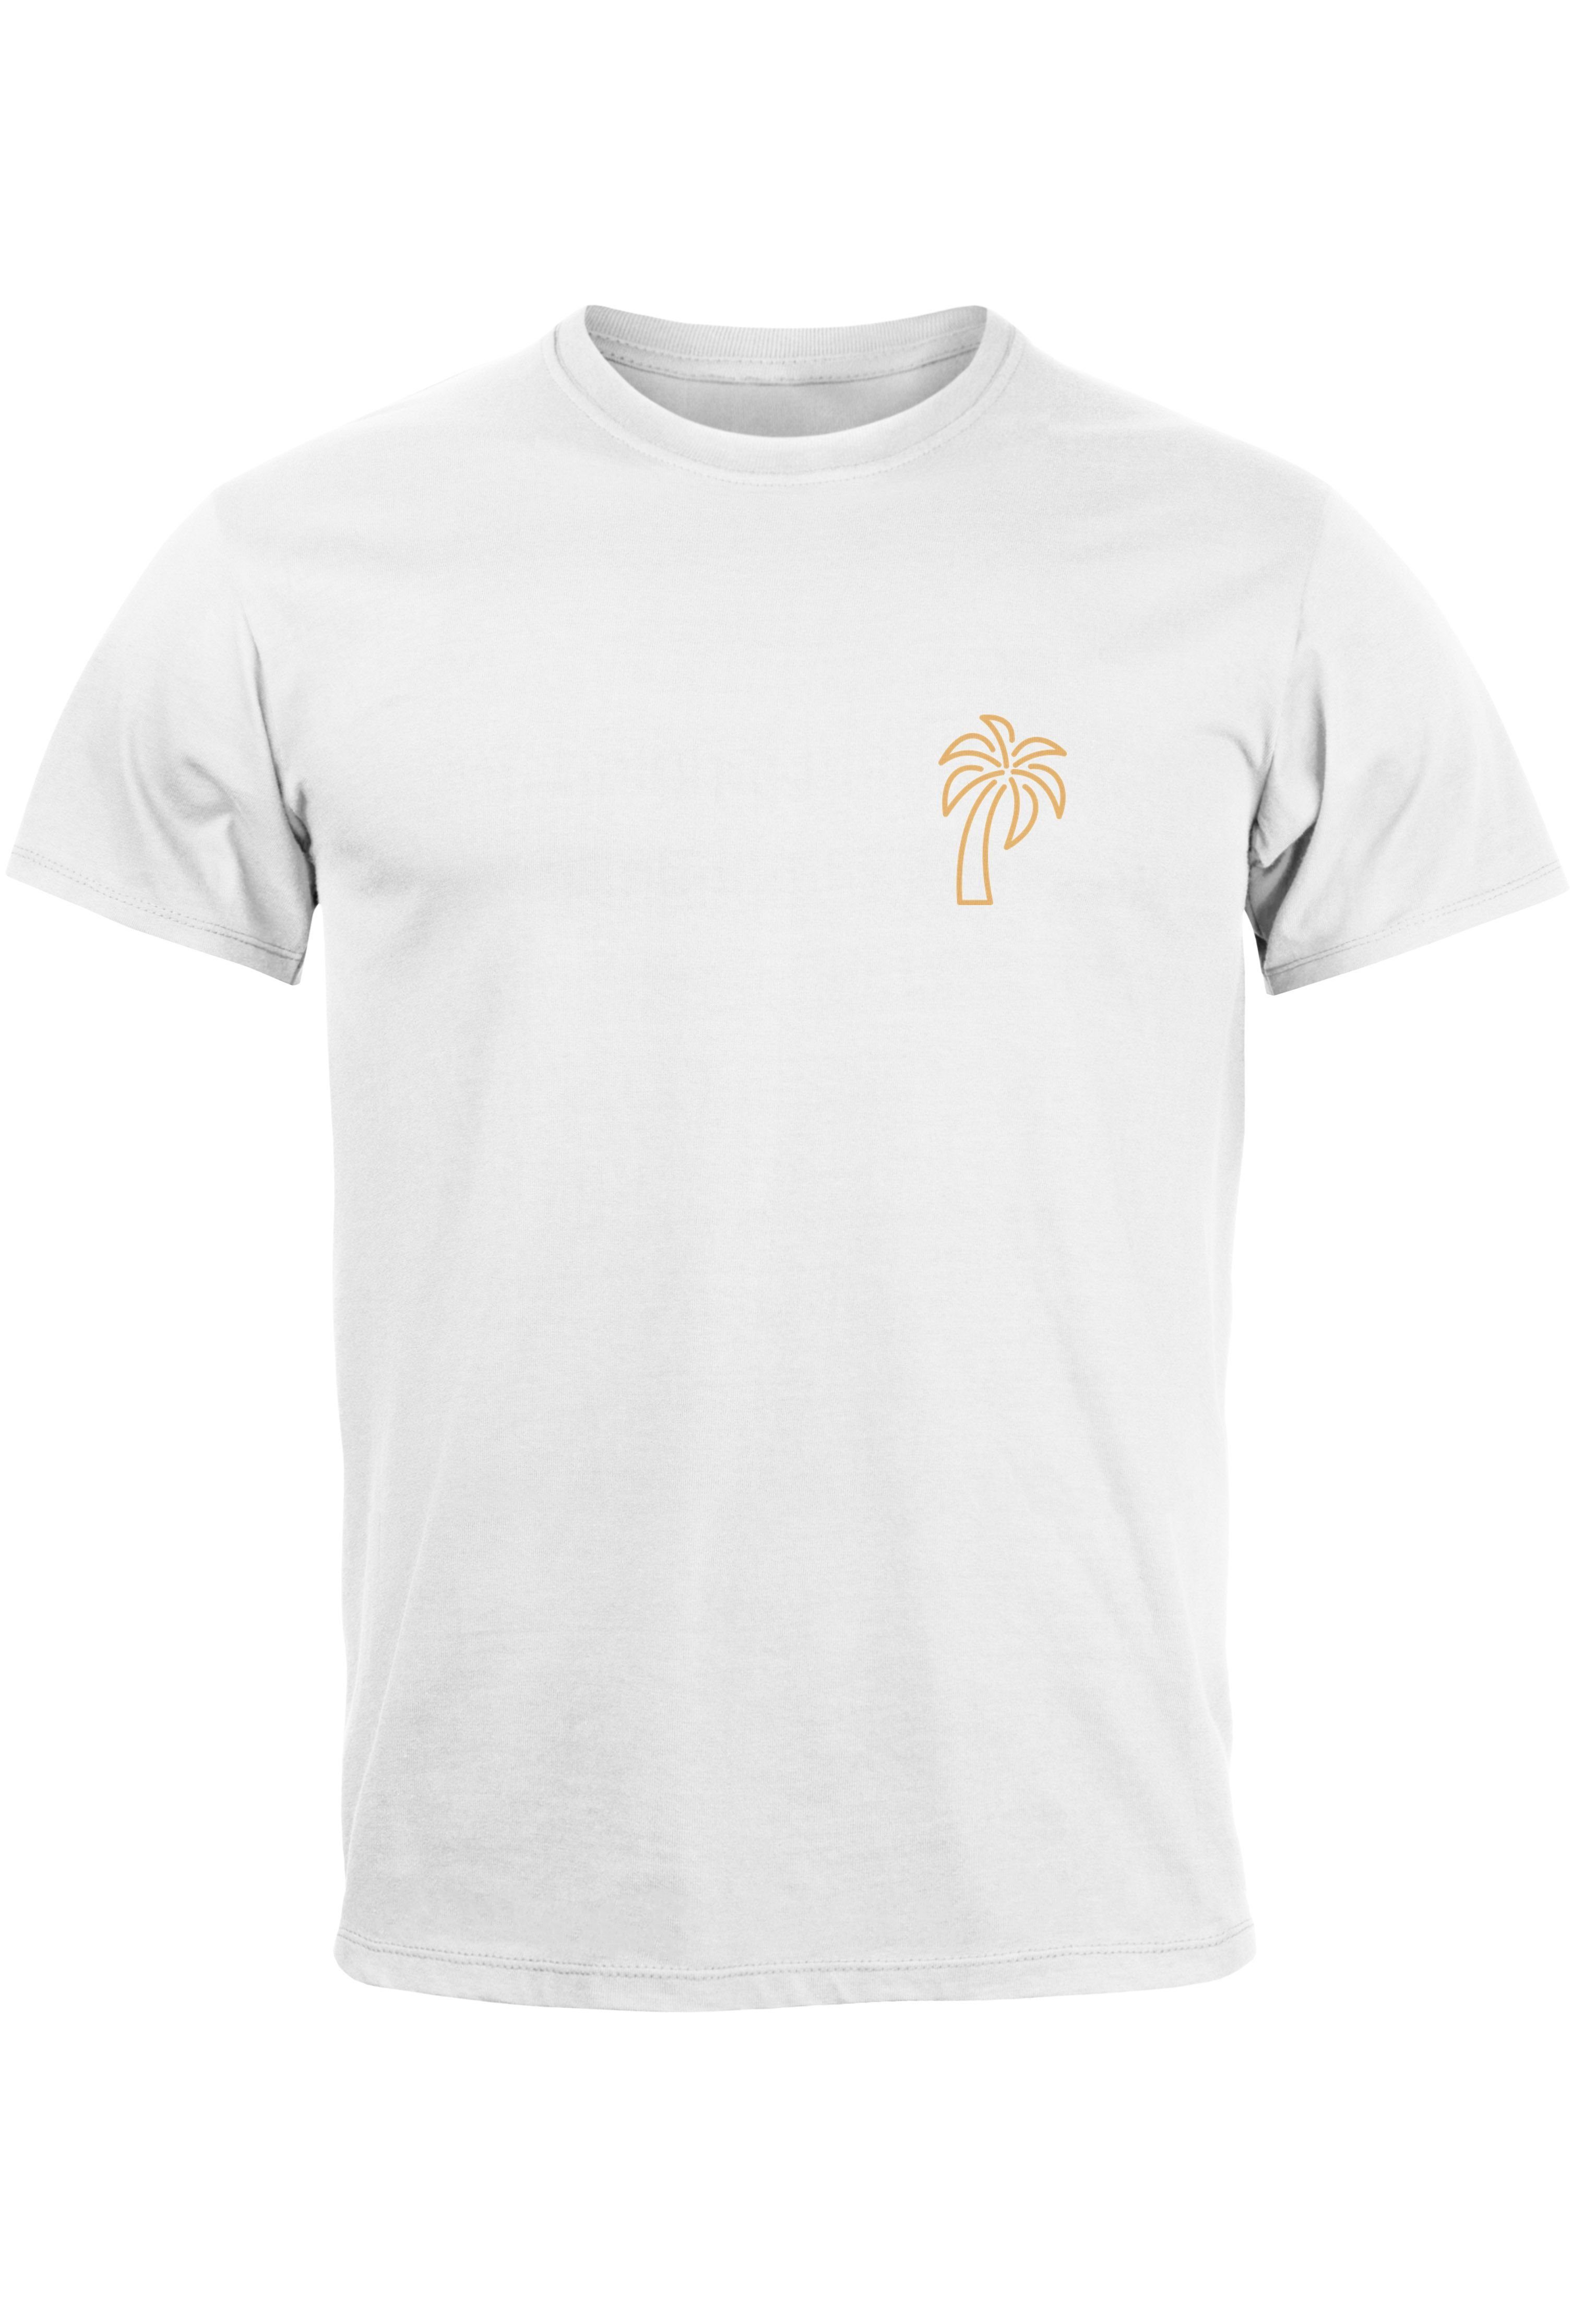 T-Shirt F Print Print-Shirt Herren Art mit Palme Sommer Neverless Print Logo weiß Badge Minimal Line Emblem